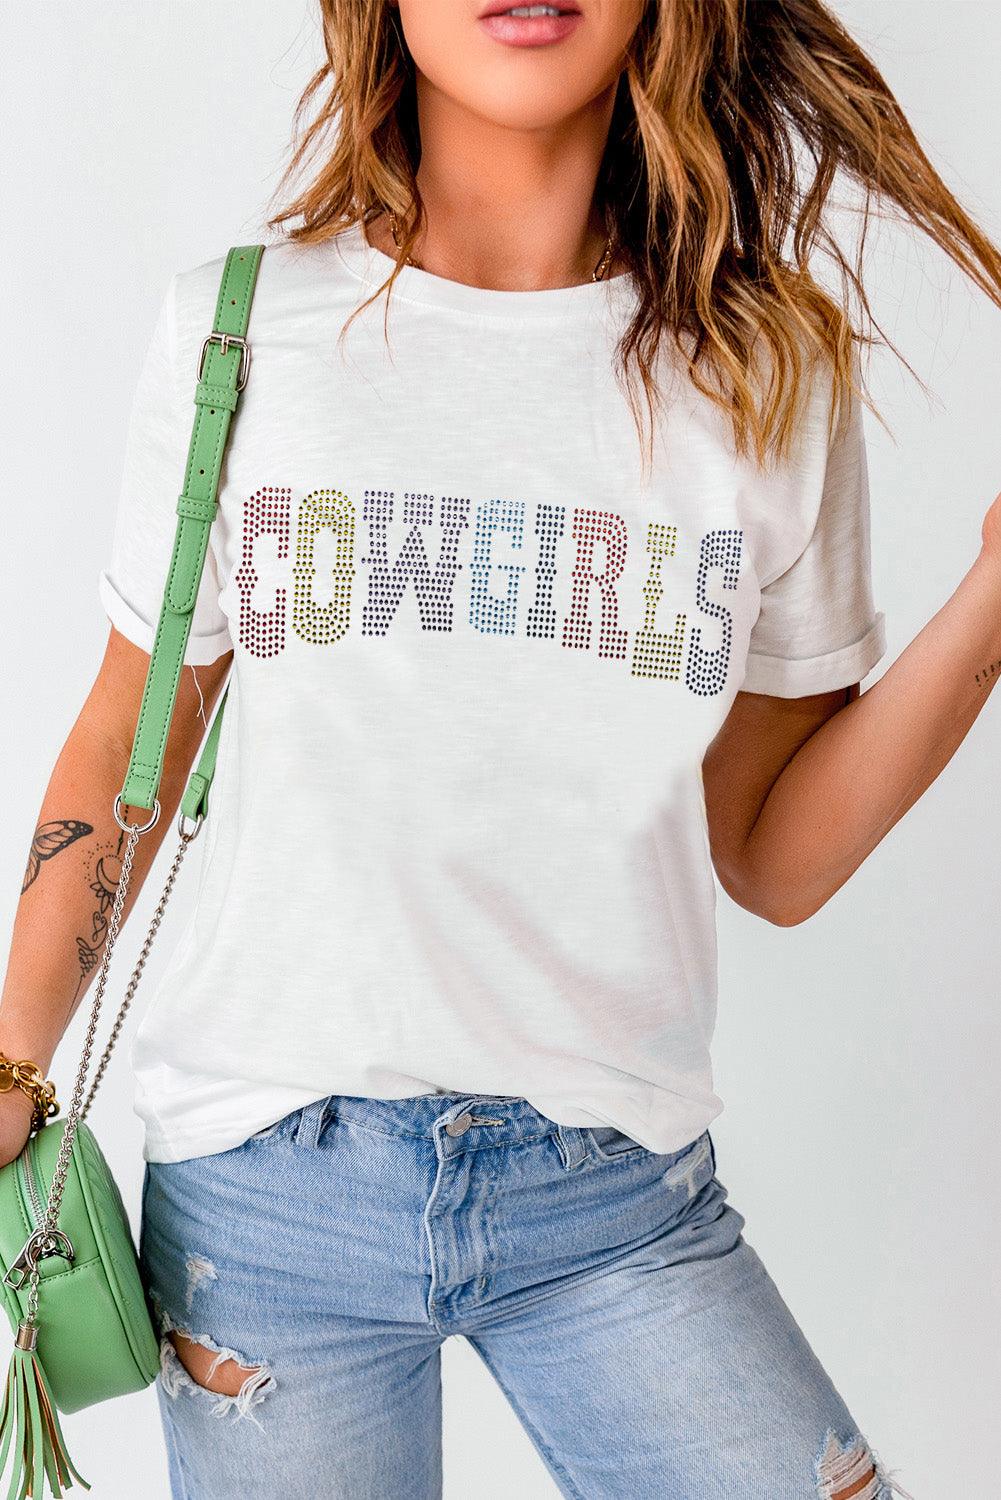 White Rhinestone Cowgirls Graphic Tee - L & M Kee, LLC